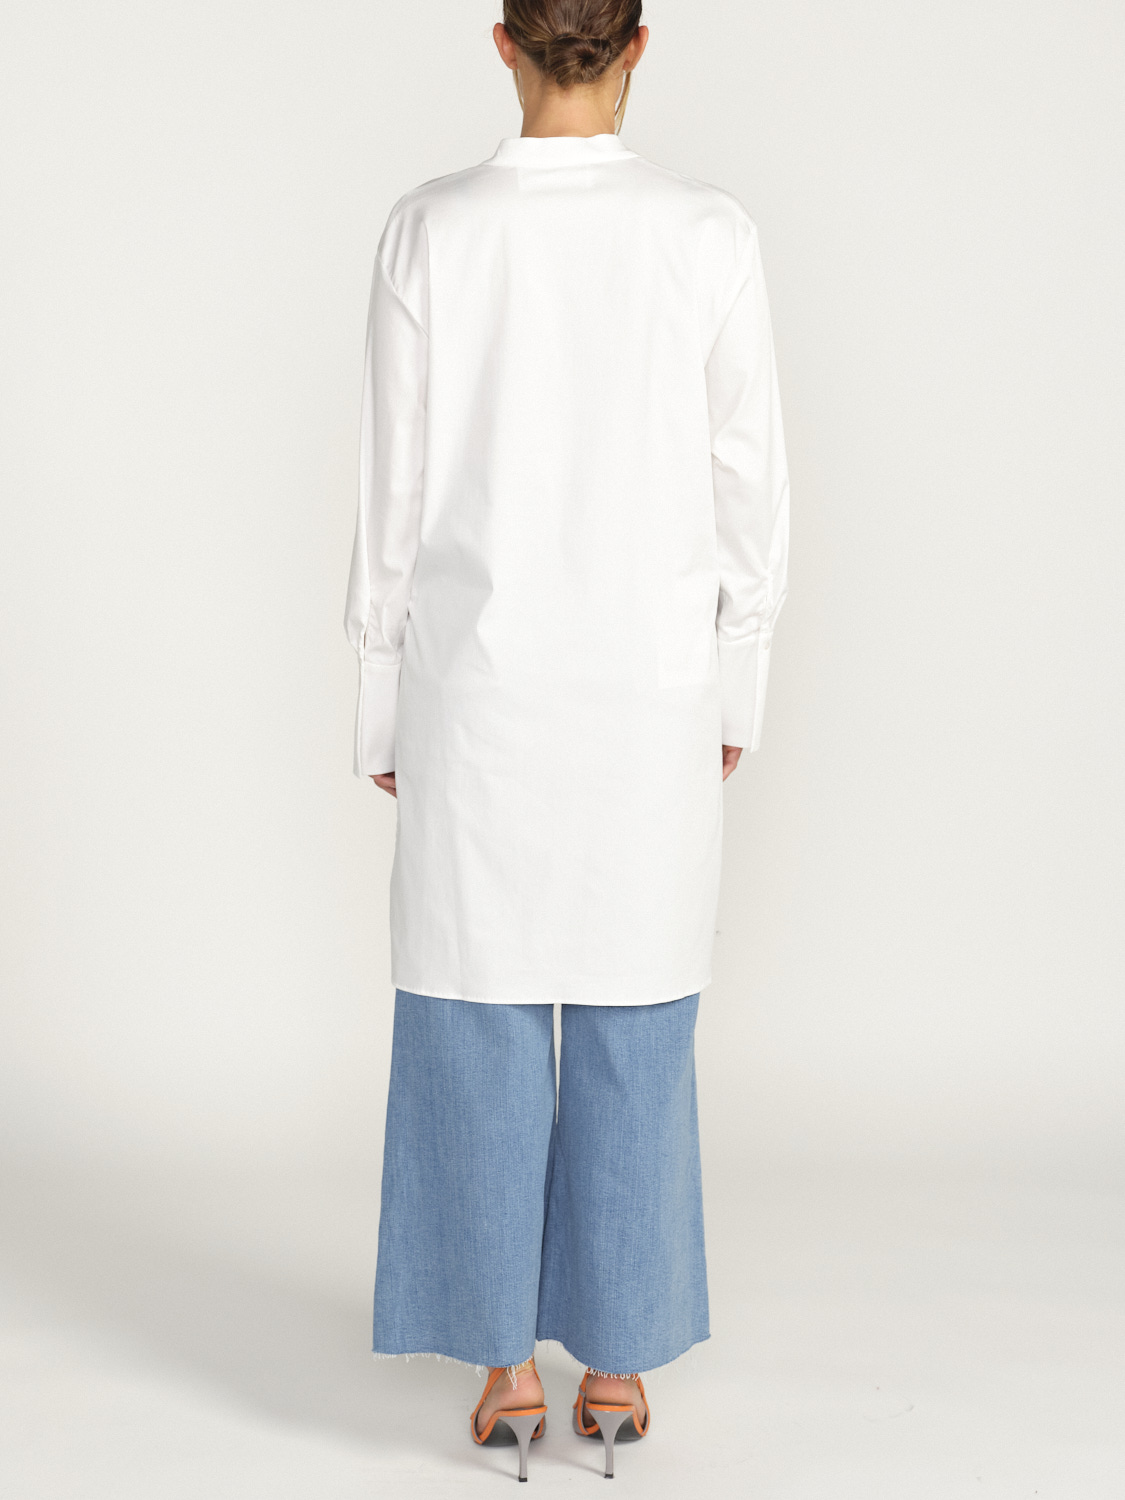 Eva Mann Margit – long blouse with half button placket   white 36